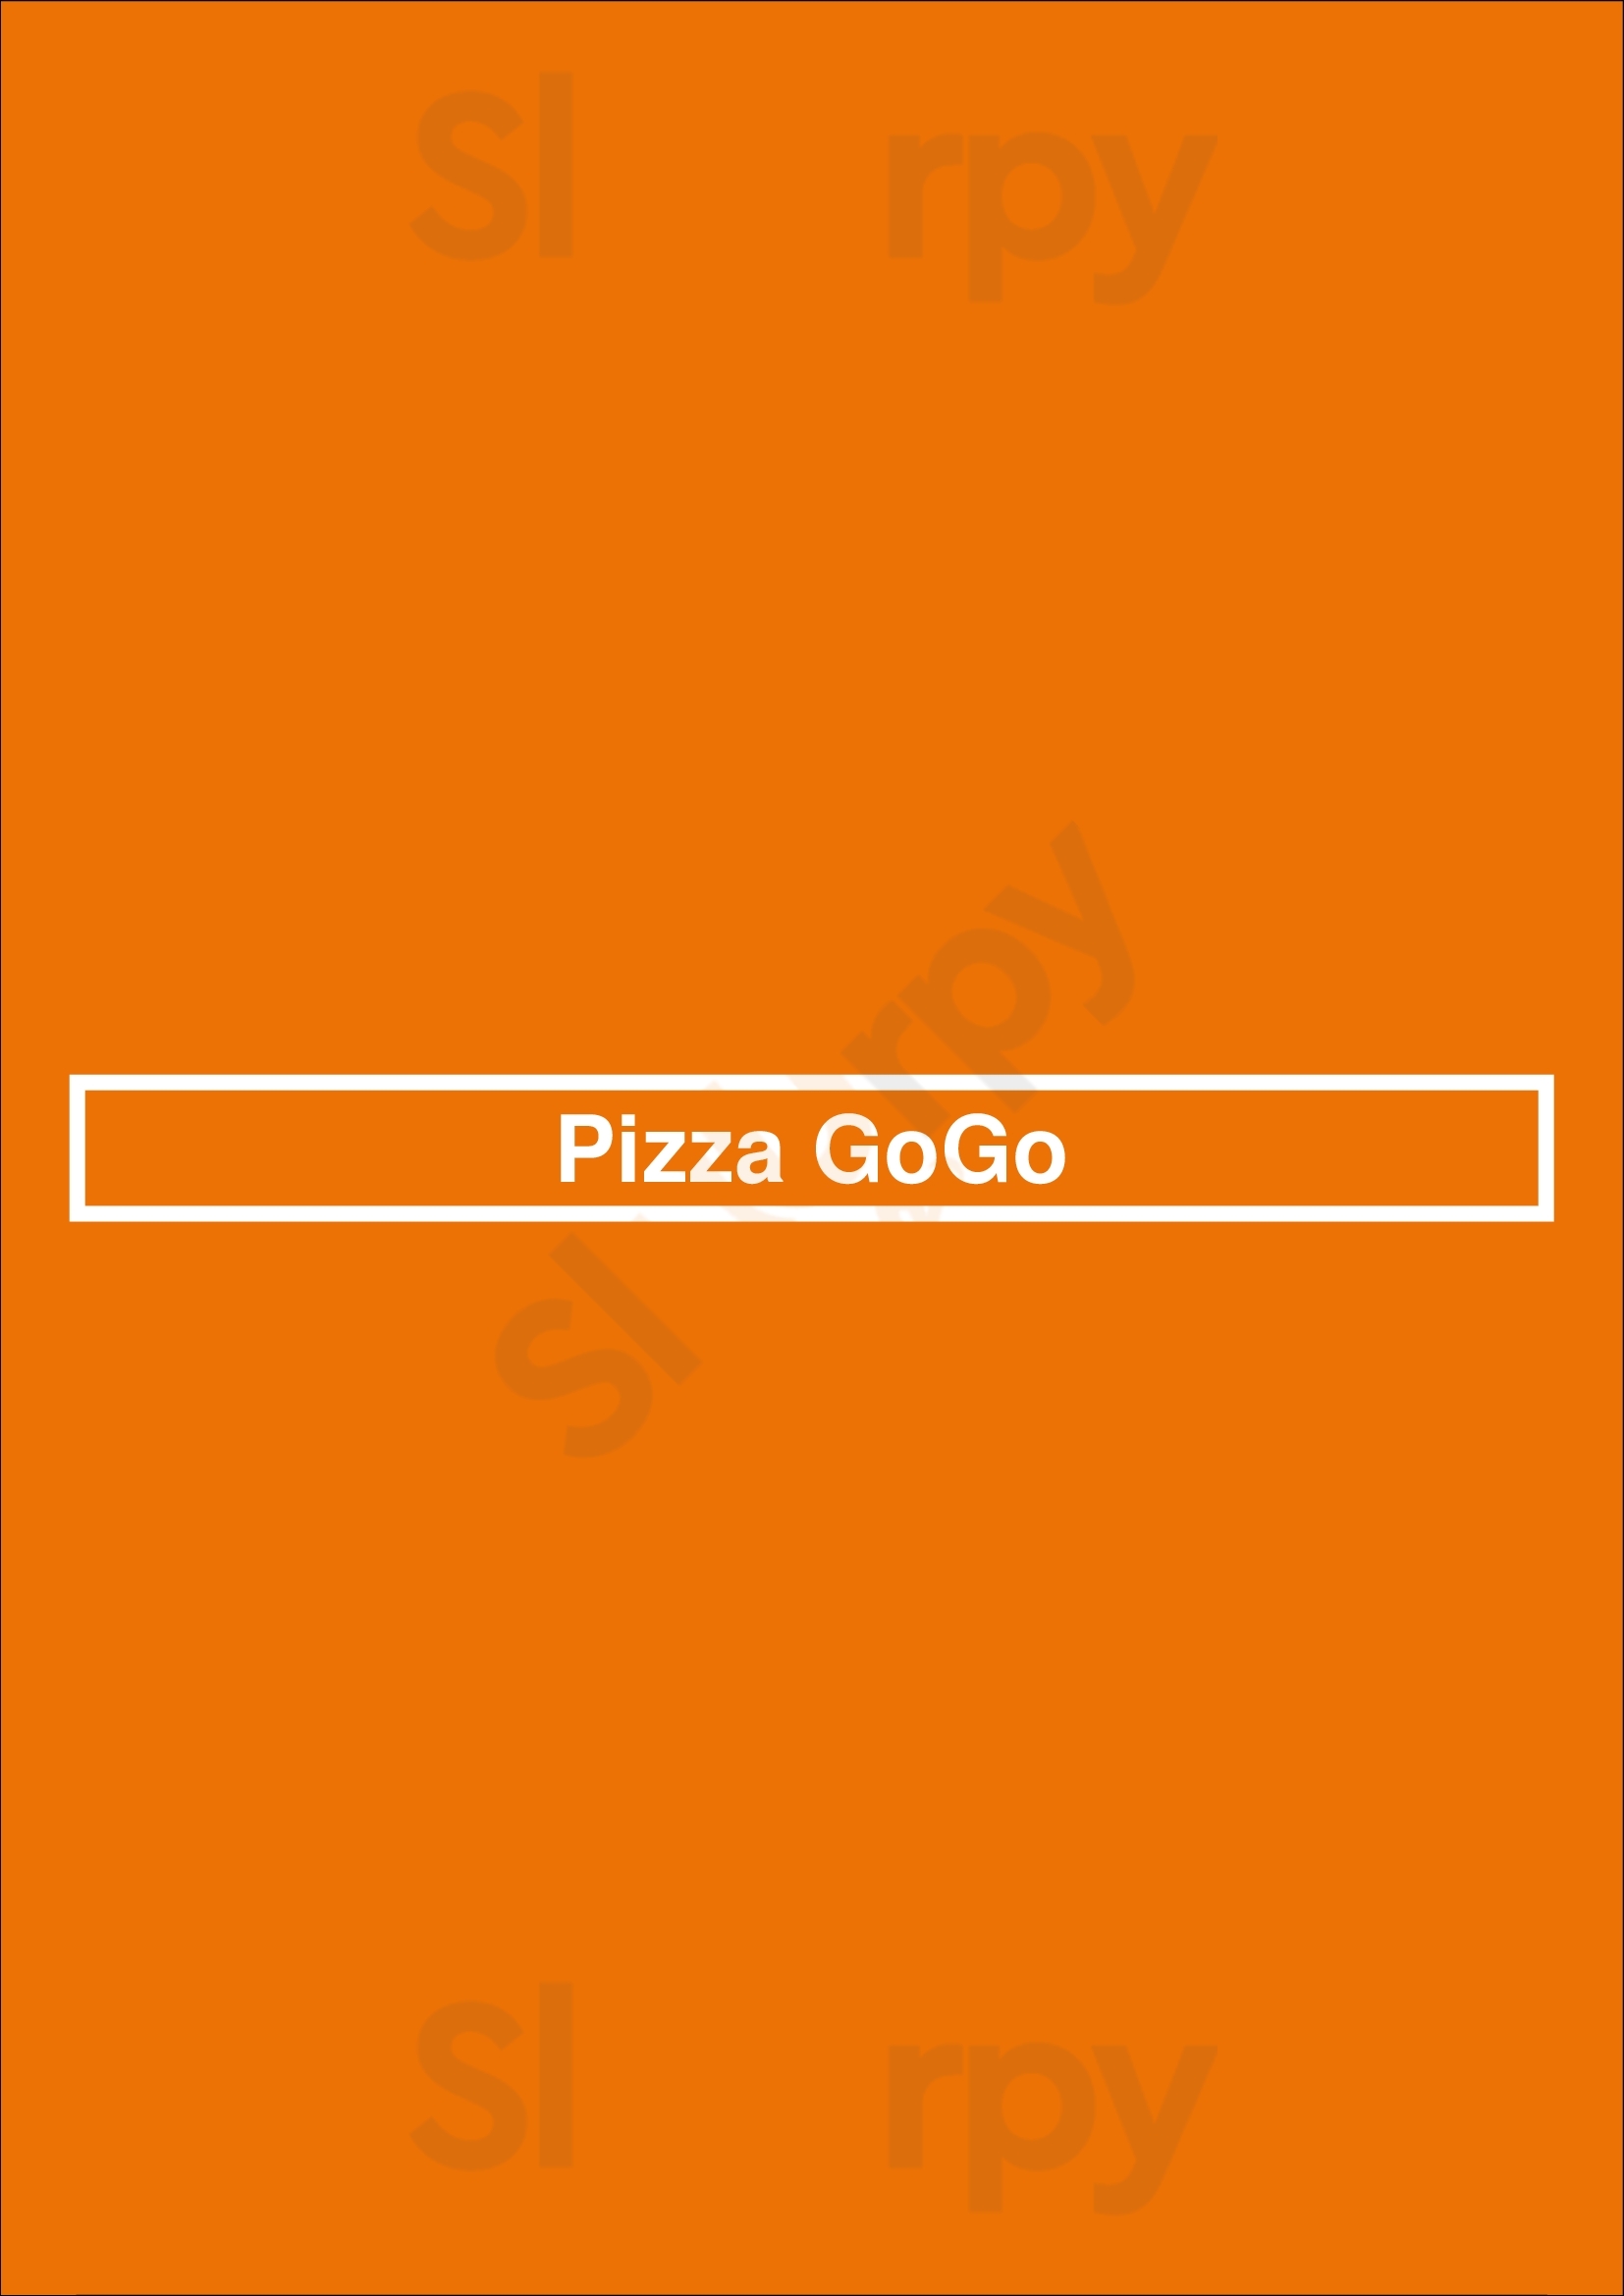 Pizza Gogo Chingford Menu - 1